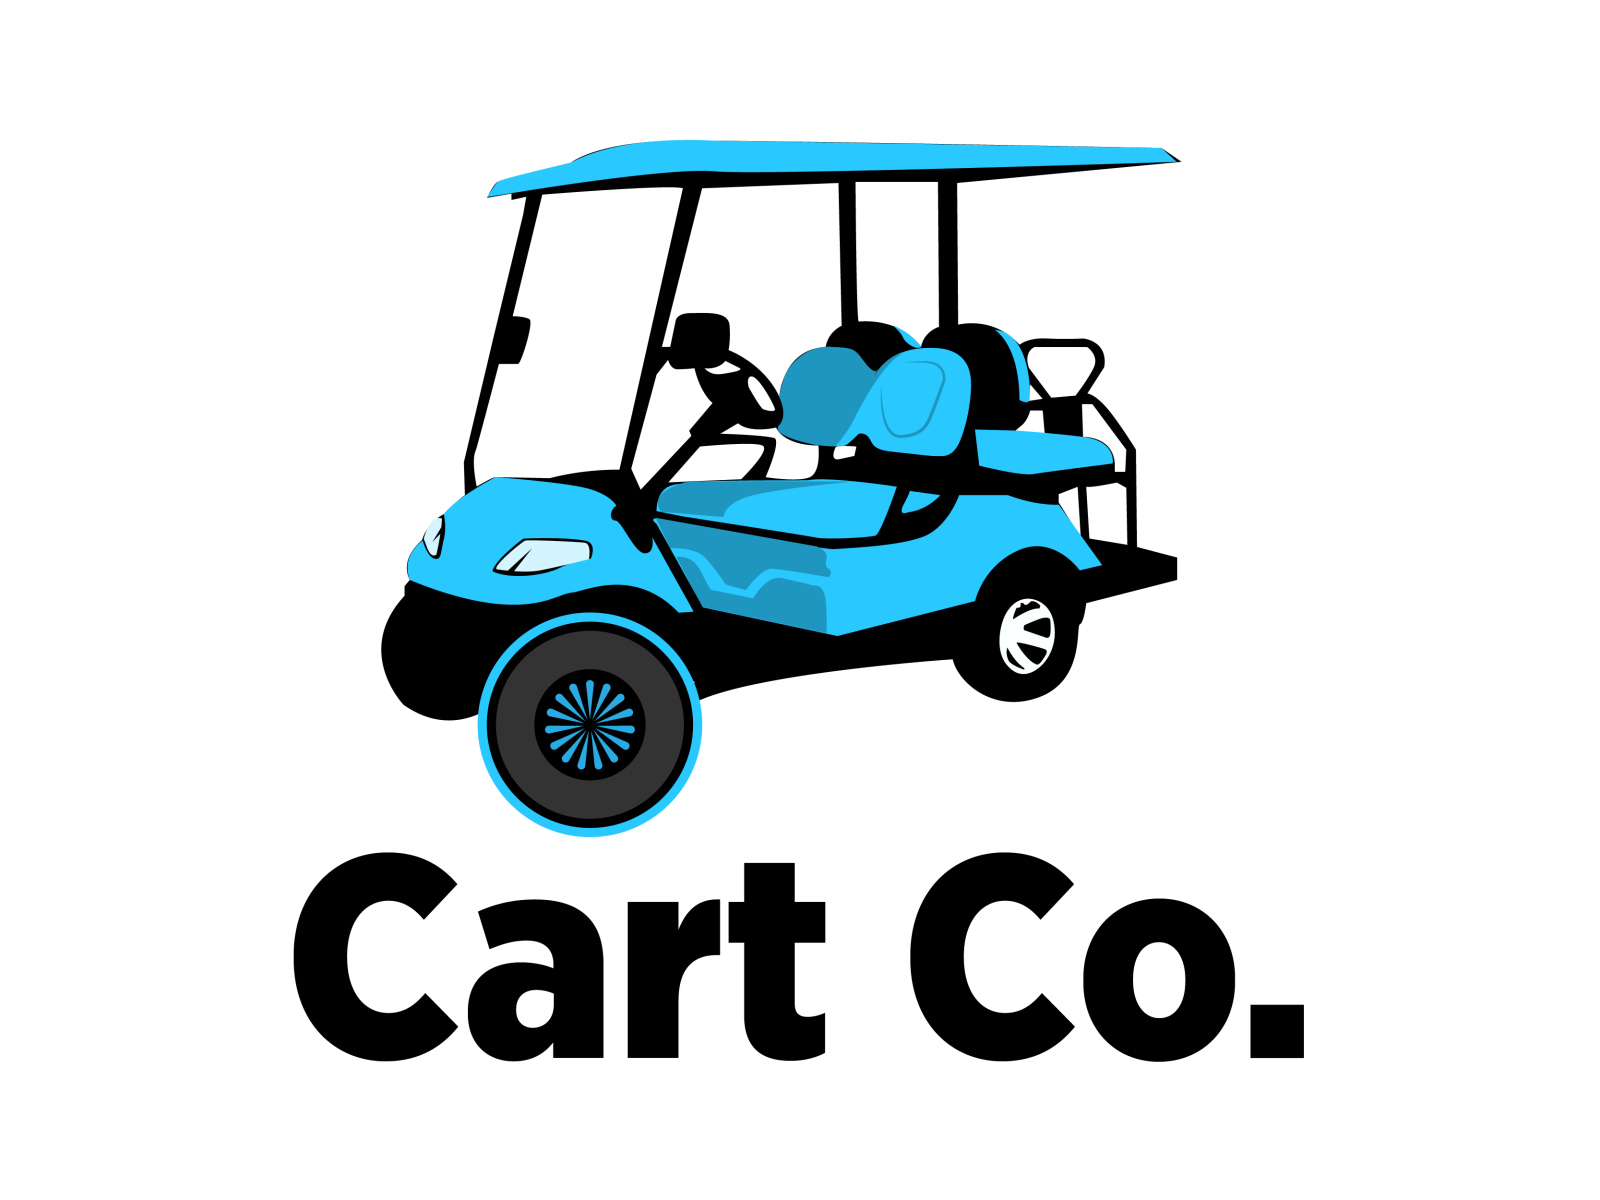 Golfcart logo by masuda072020@gmail.com on Dribbble